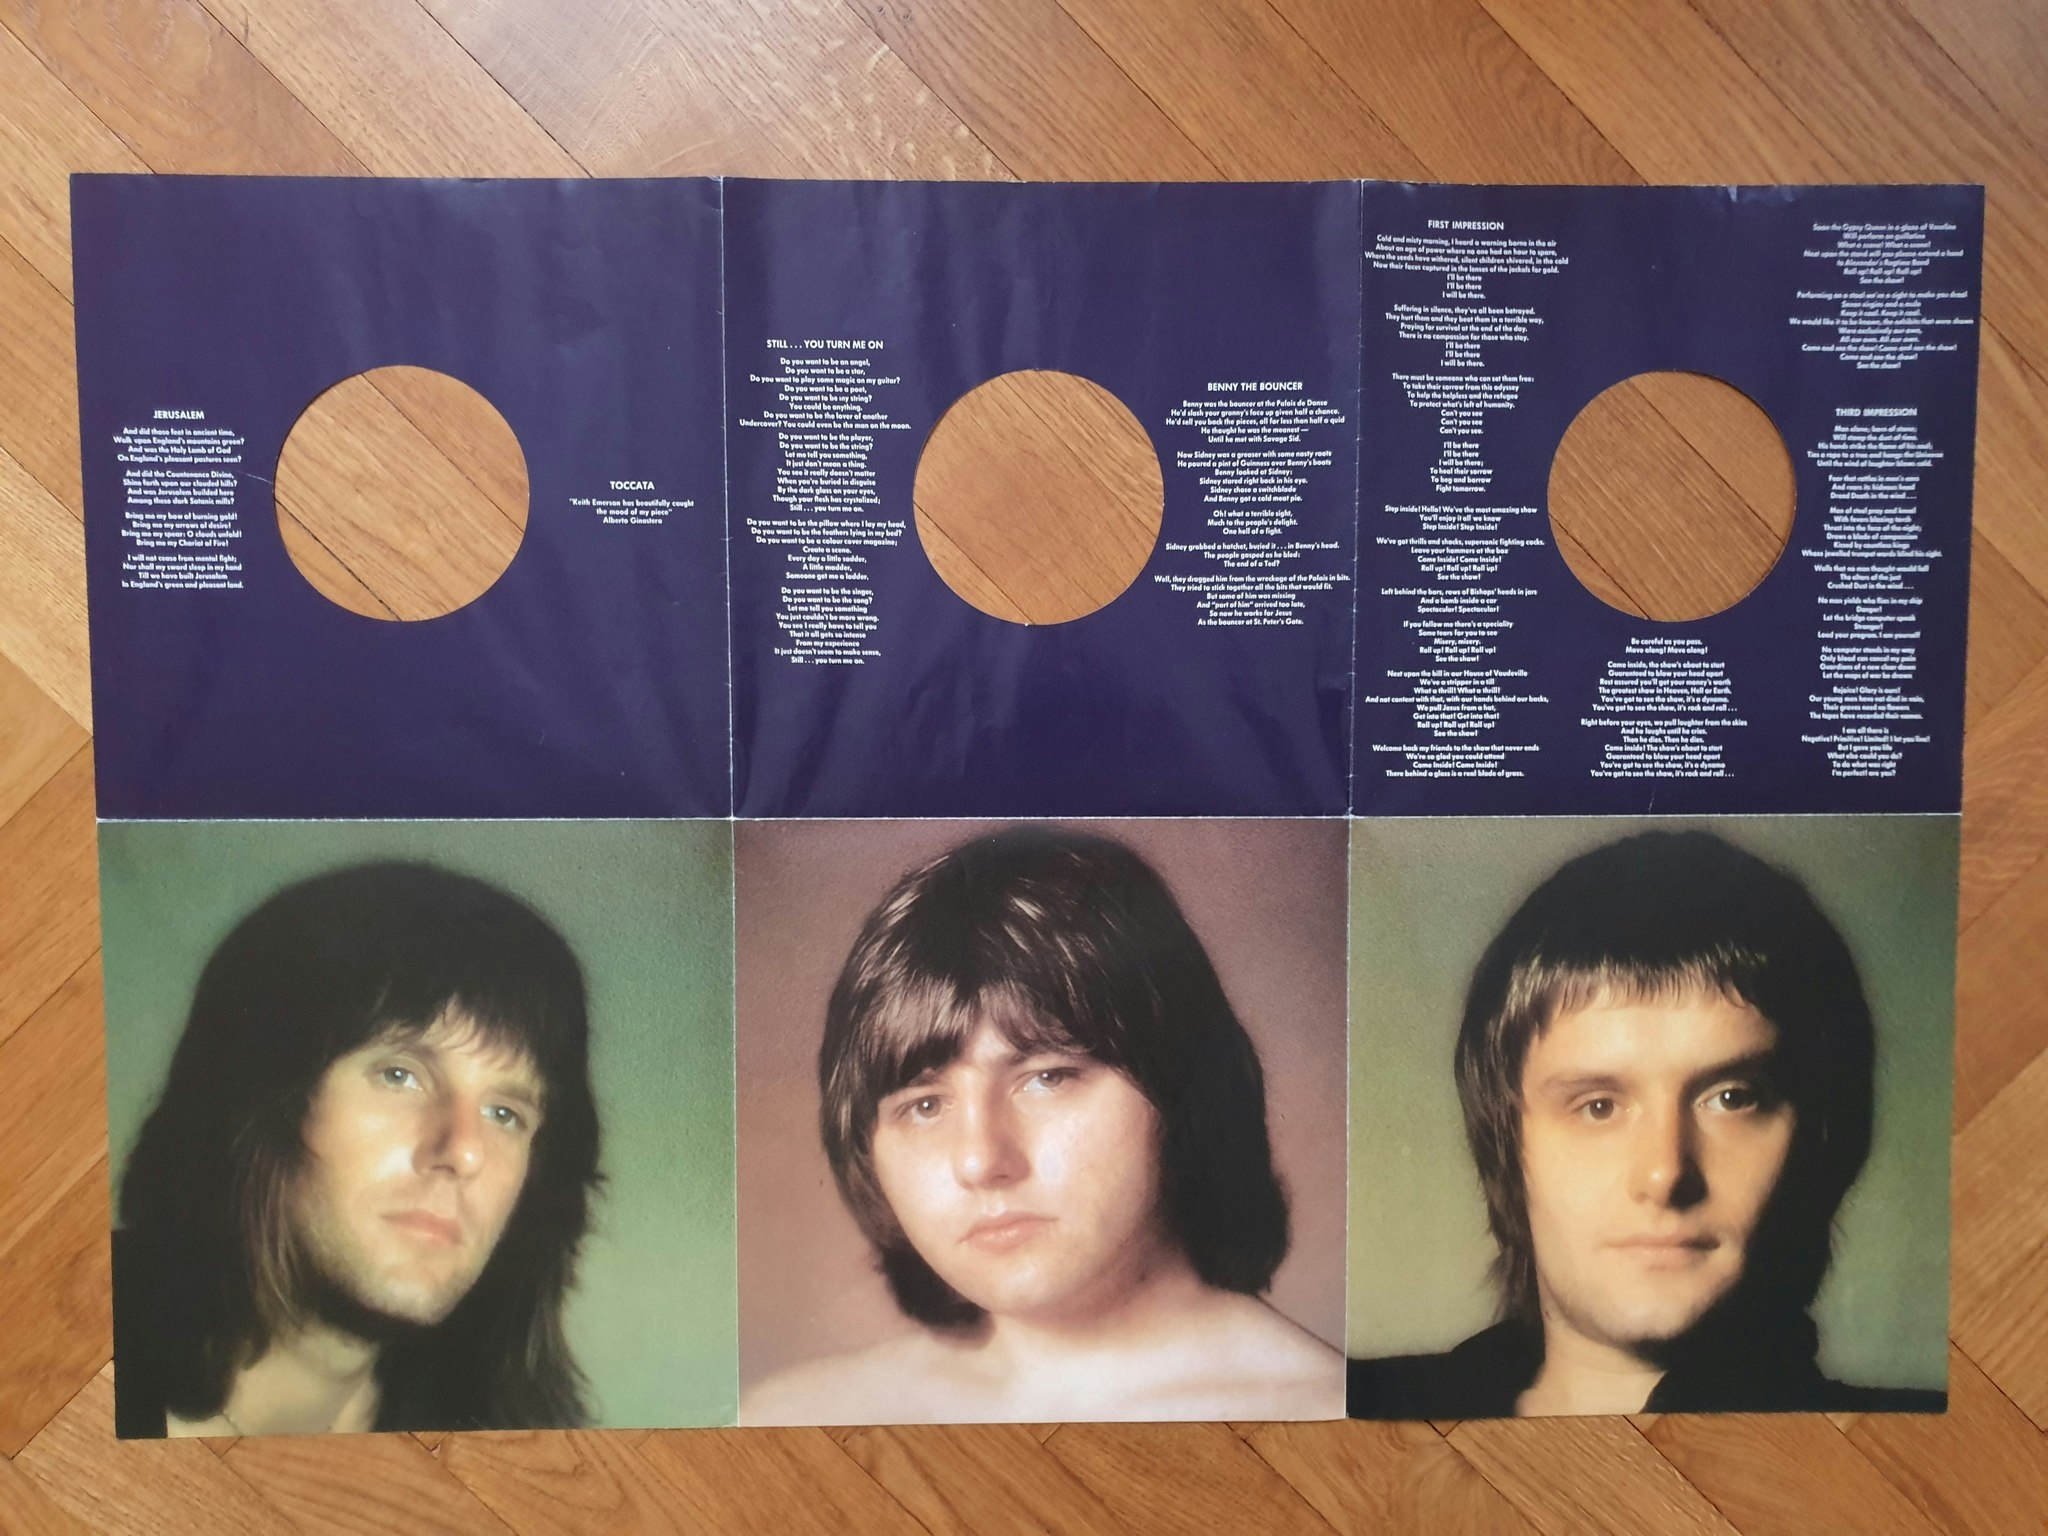 Emerson, Lake & Palmer, Brain salad surgery. Vinyl LP